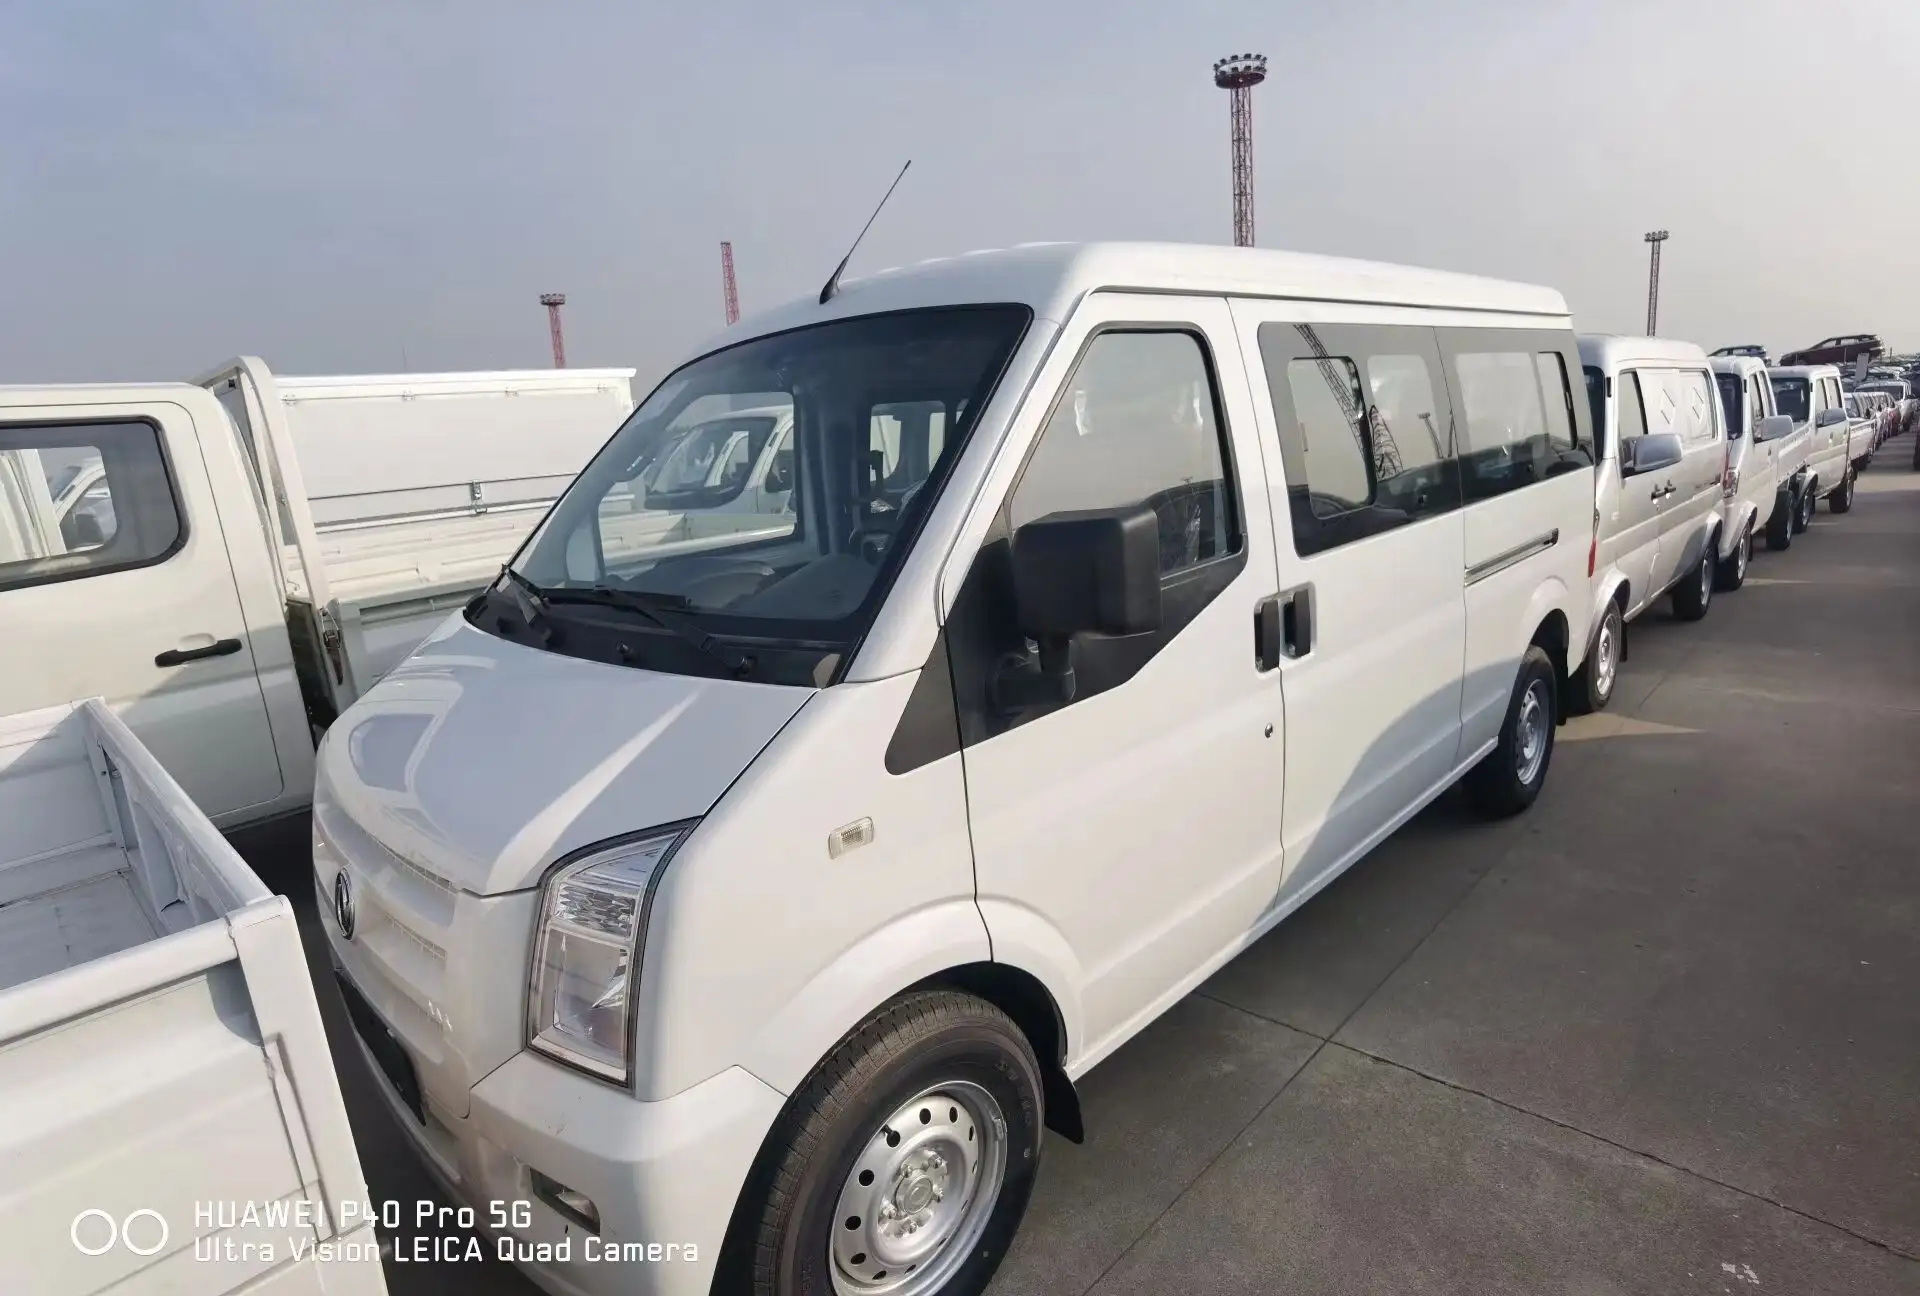 Vente chaude Dongfeng mini van bus bien-être 4x2 C37 LHD/RHD Mini bus